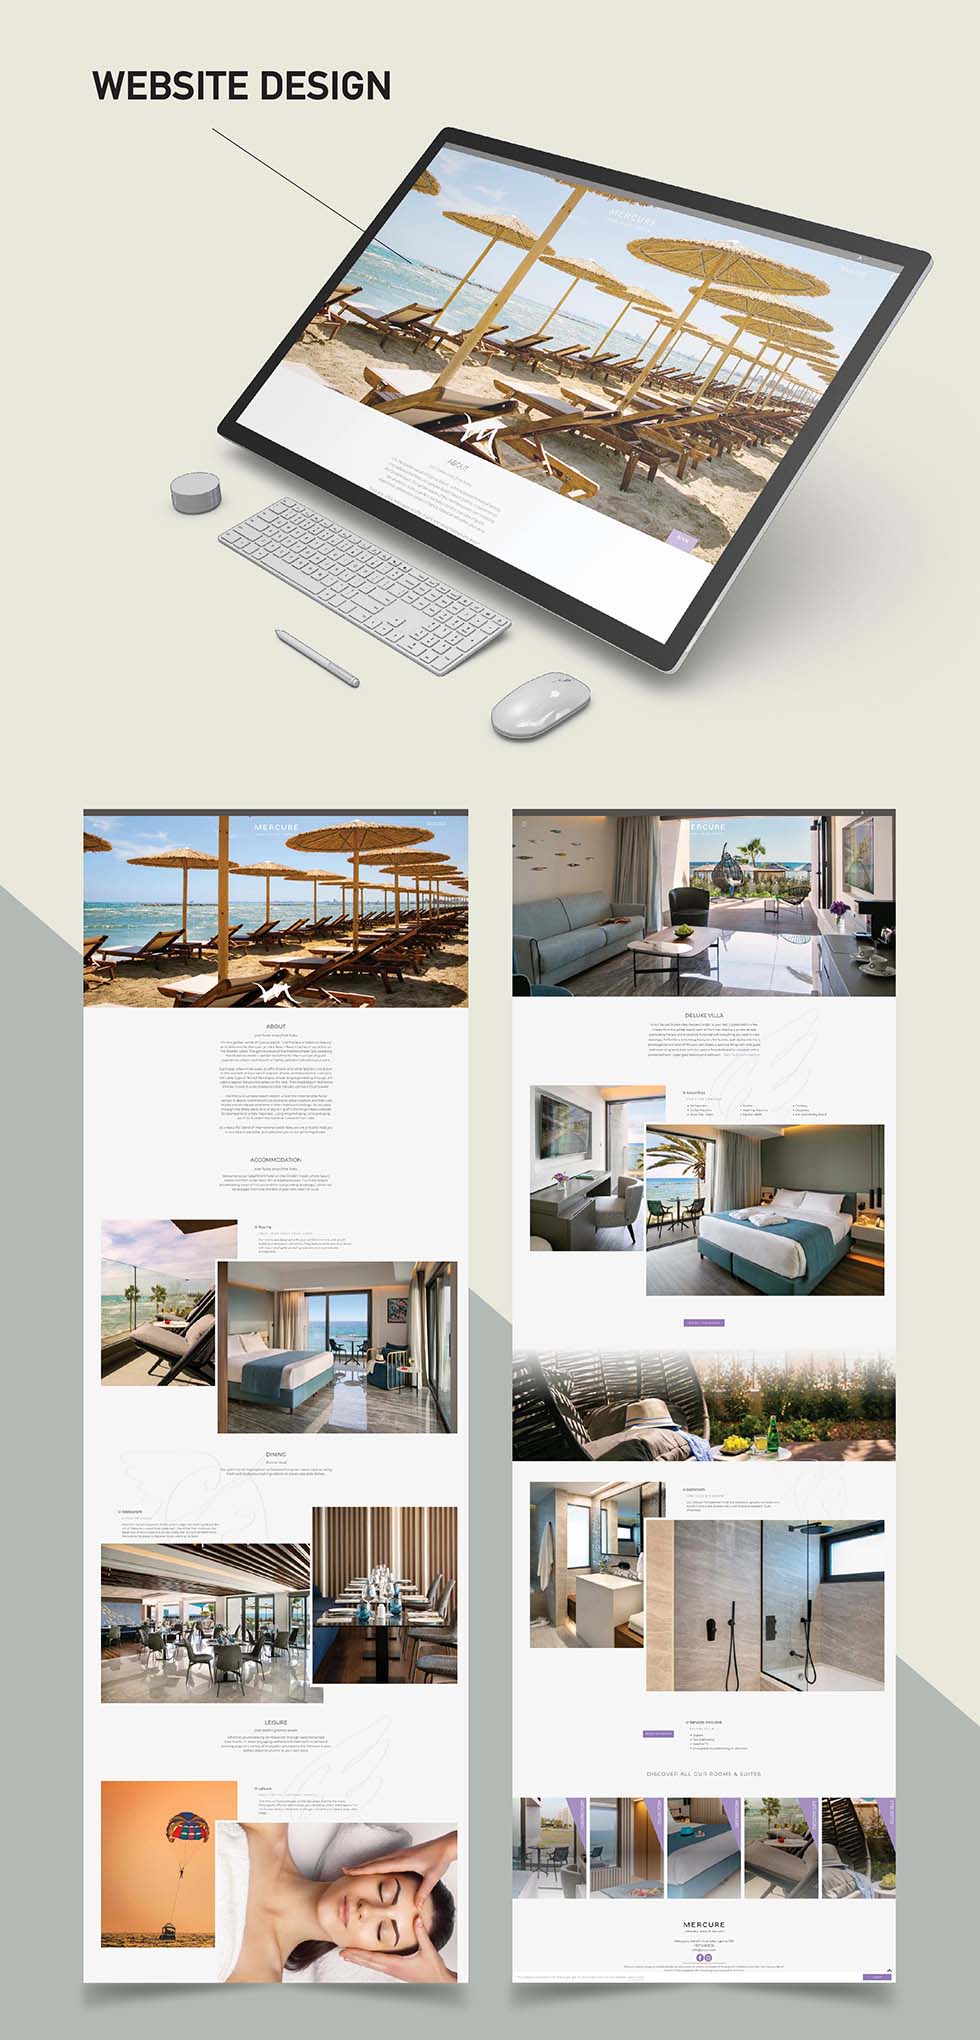 Mercure Hotel - Online Presence image